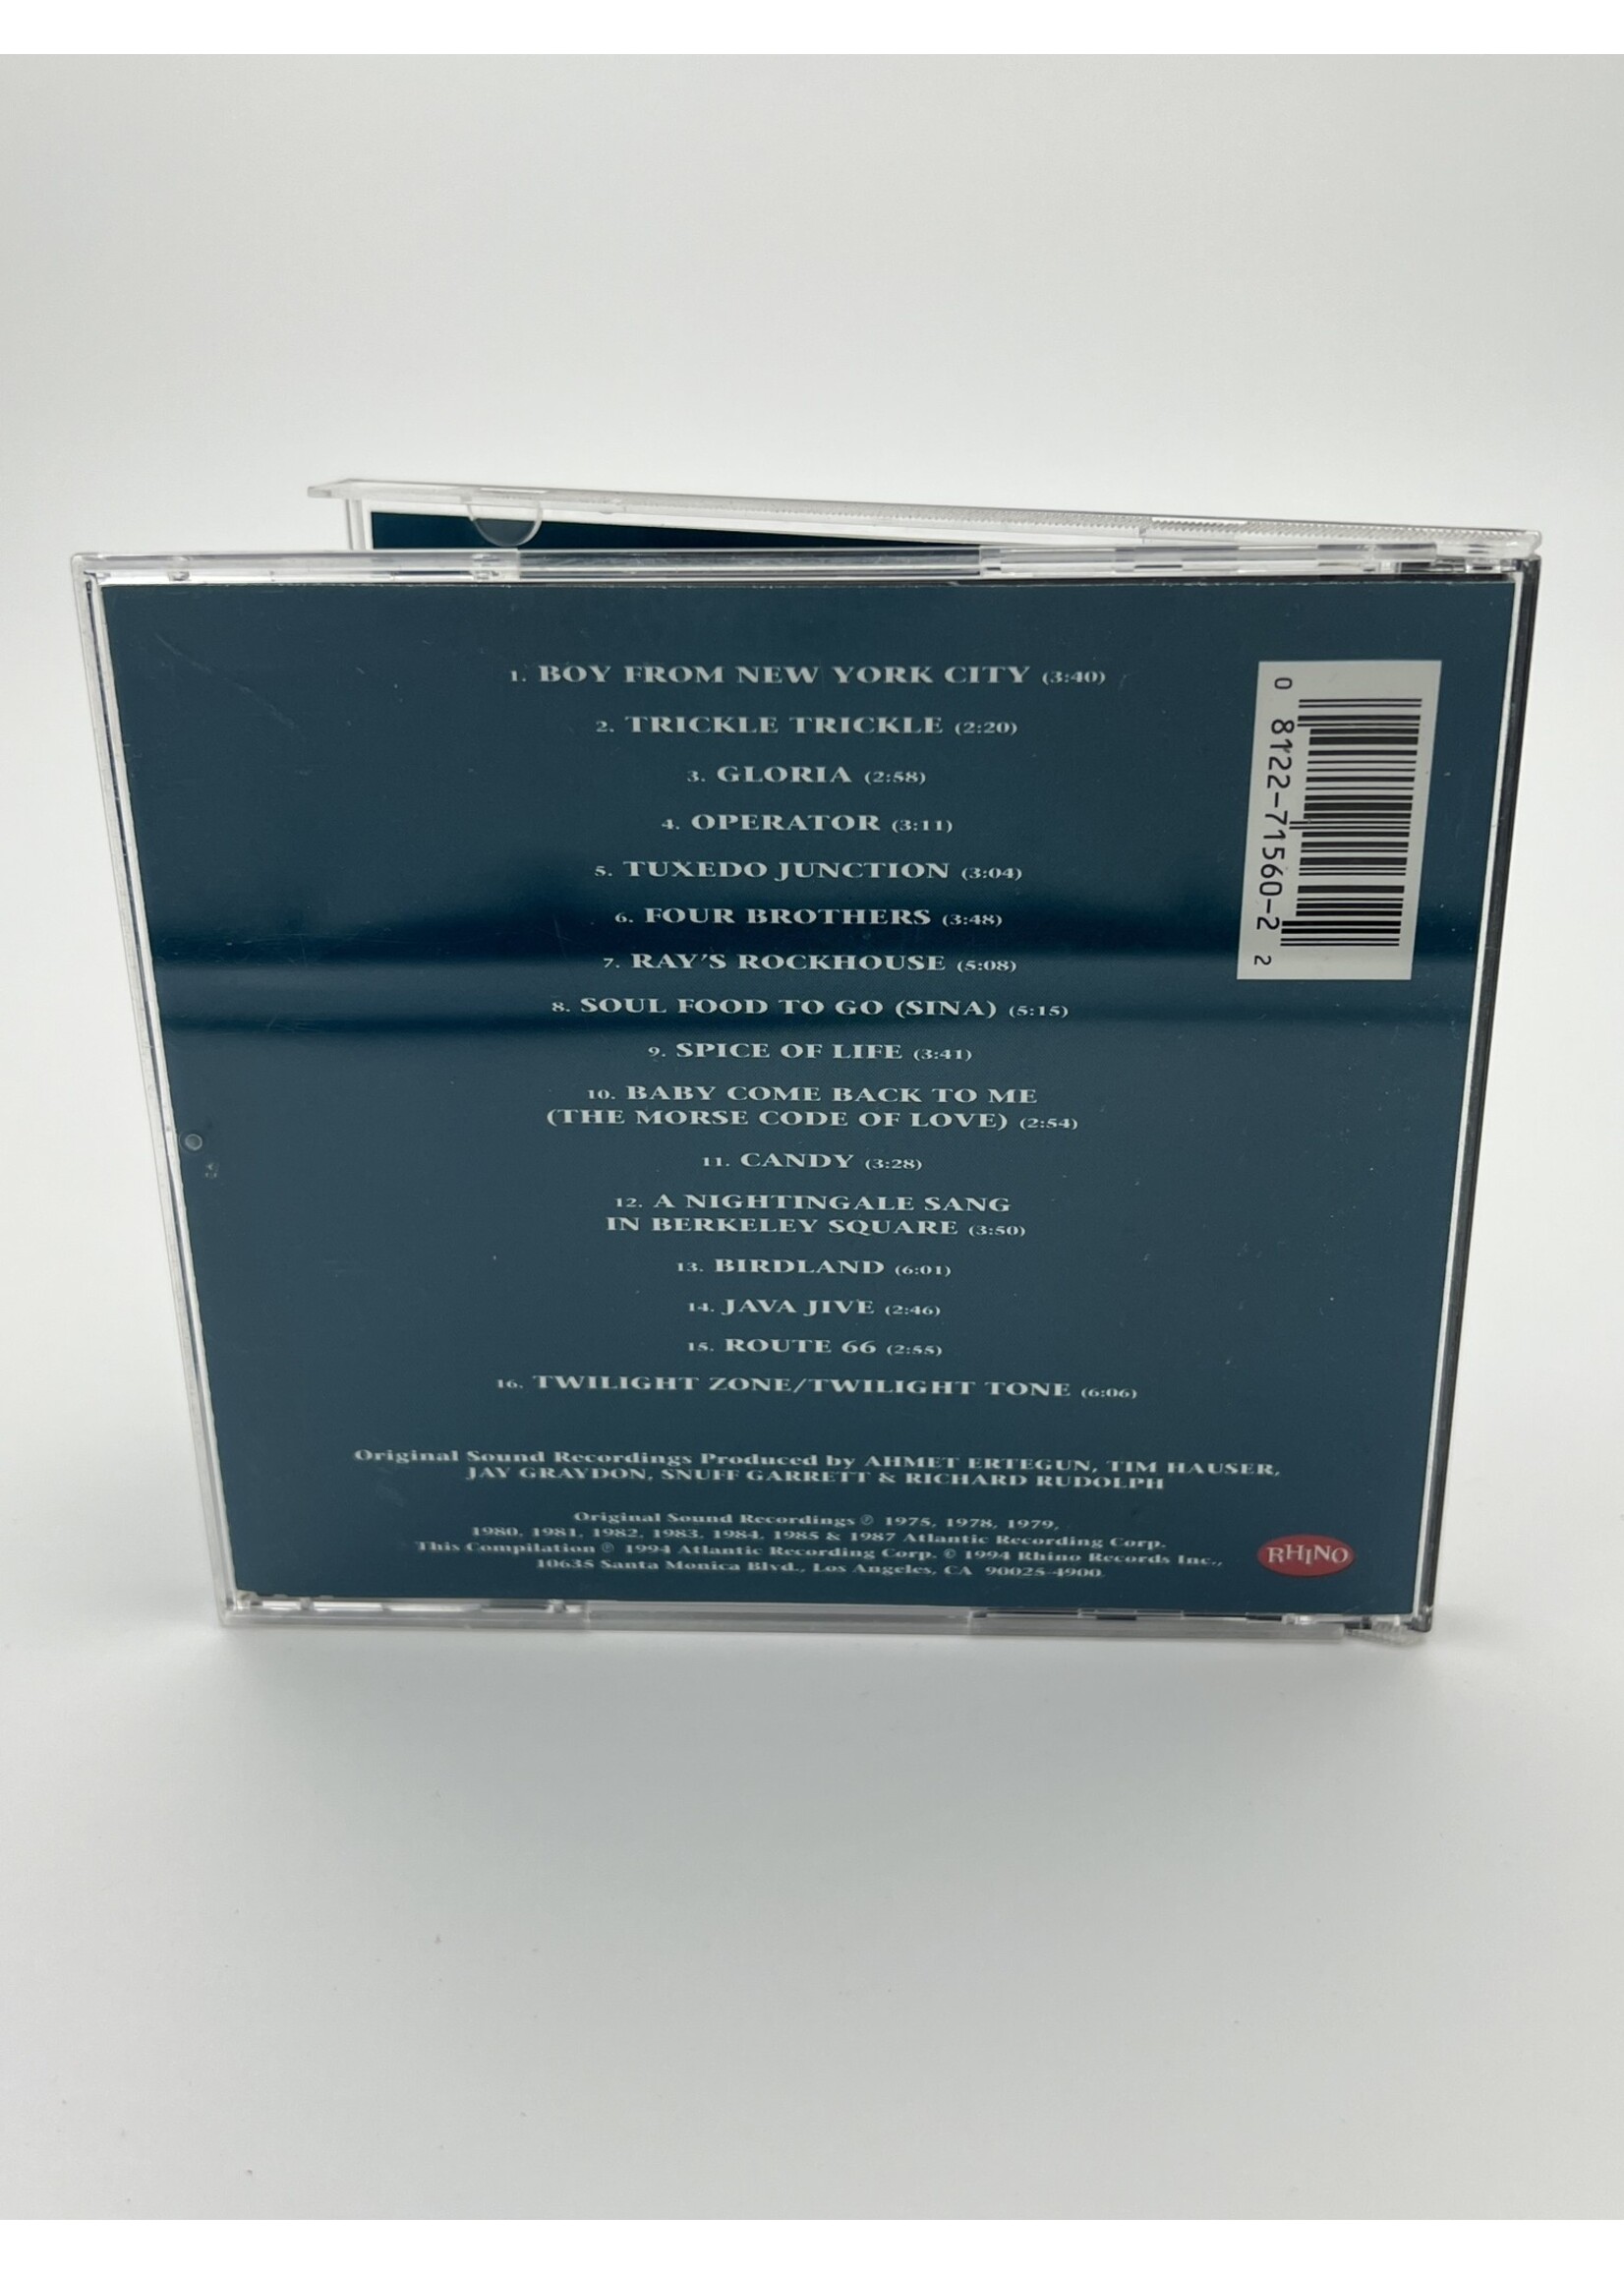 CD   The Very Best Of The Manhattan Transfer CD